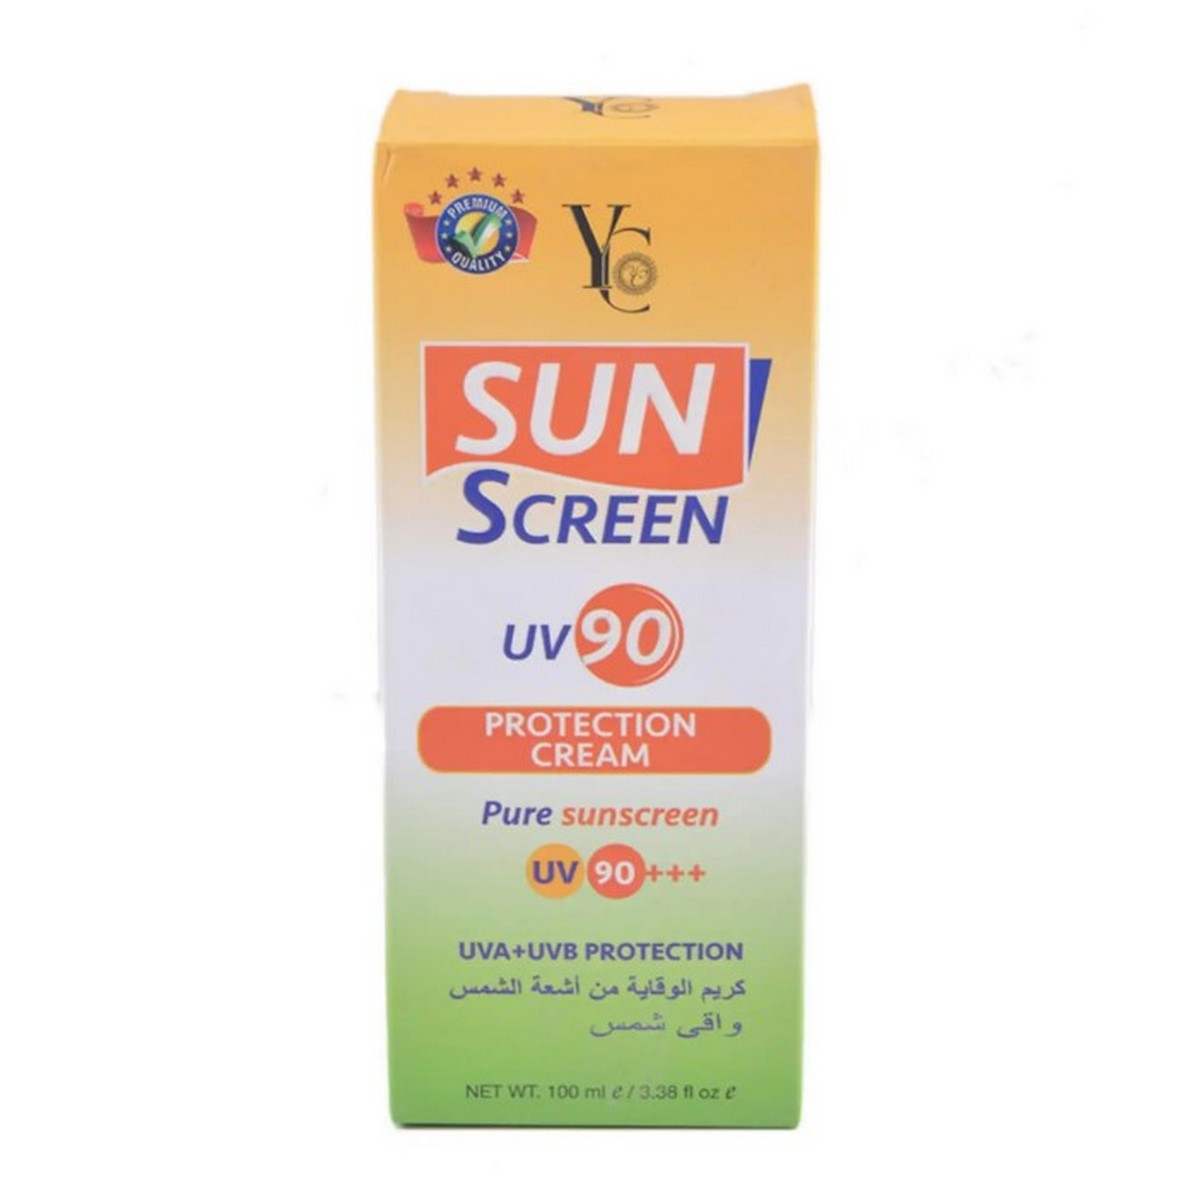 YC Sunscreen Cream Uv90+ – 100Ml